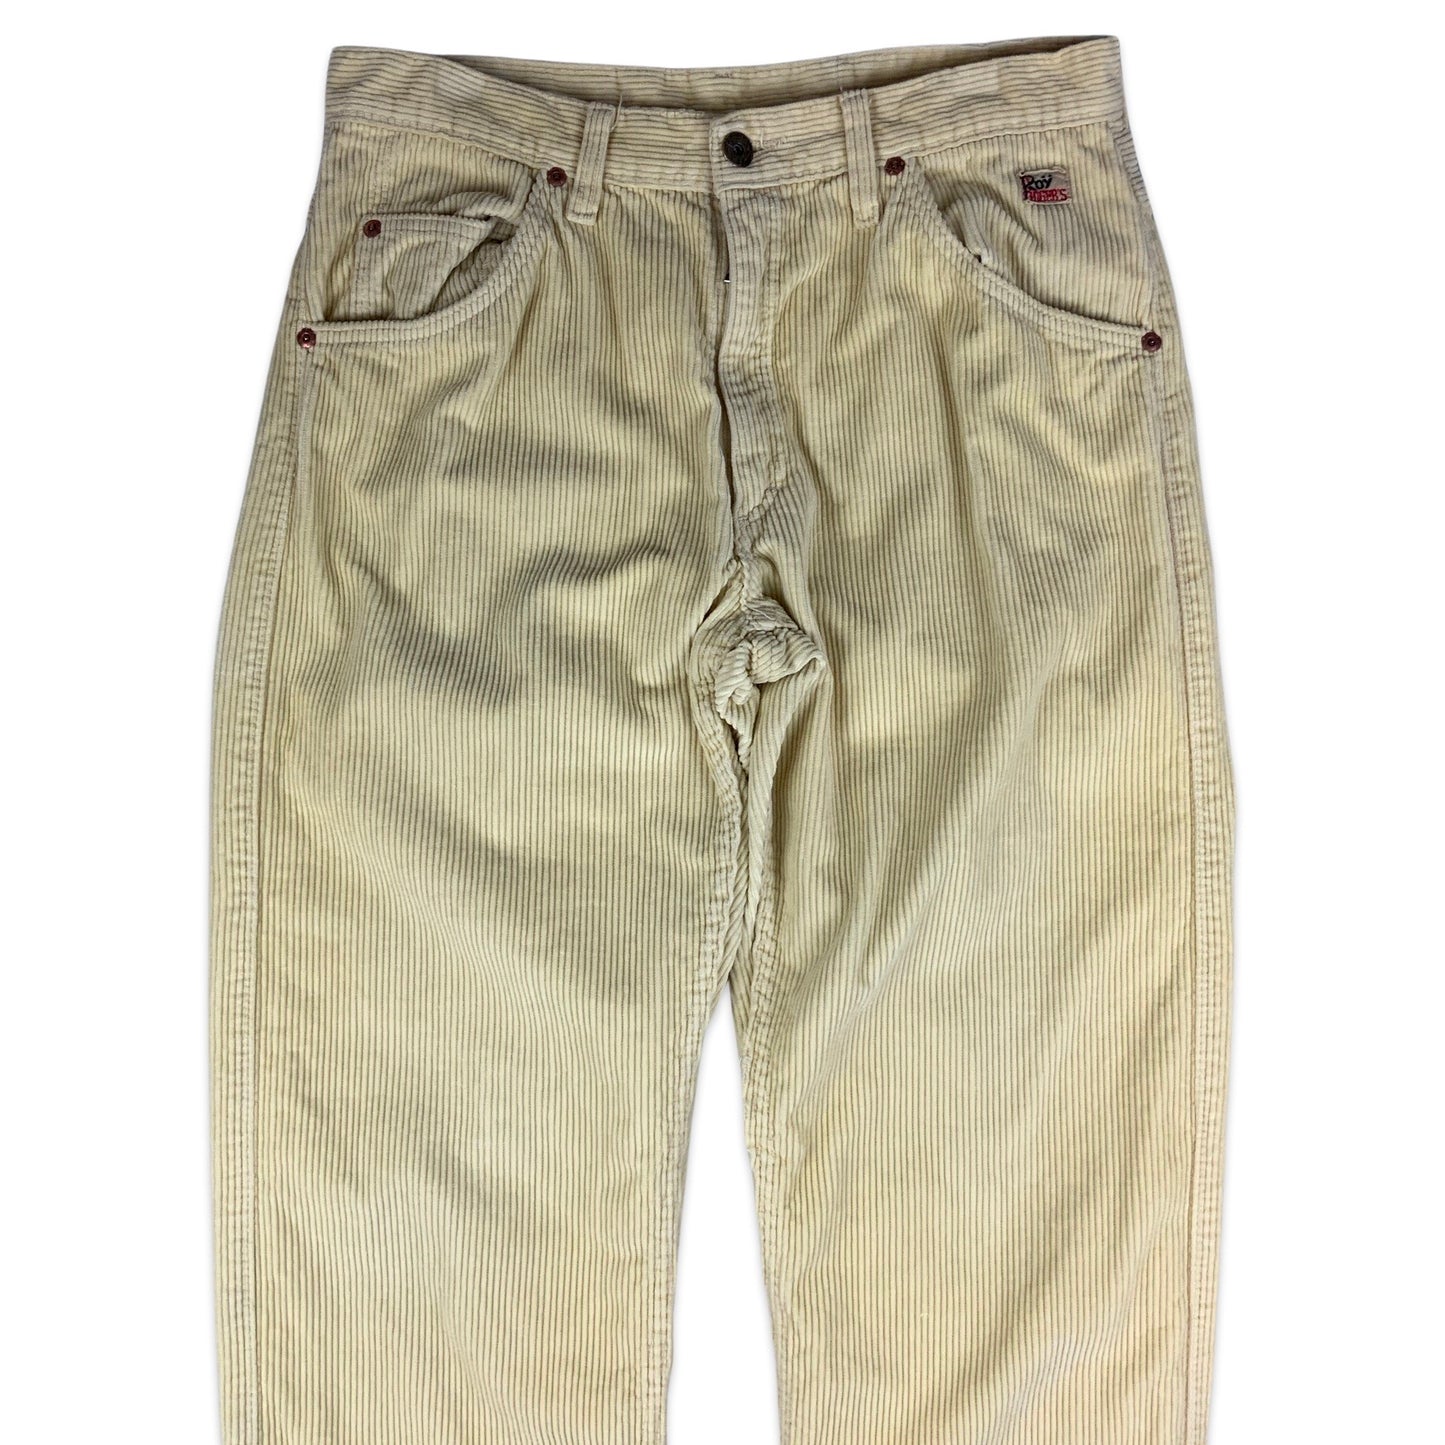 Vintage Beige Corduroy Trousers 31W 30L